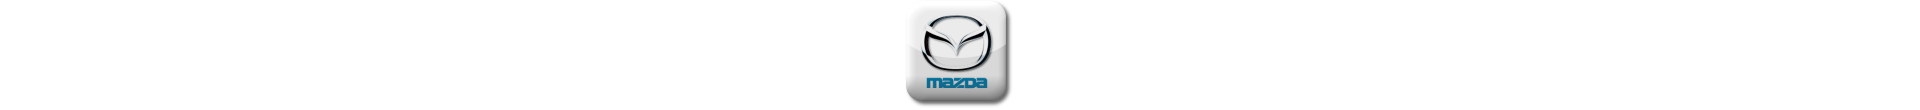 Boitier additionnel Mazda Essence Evolussem